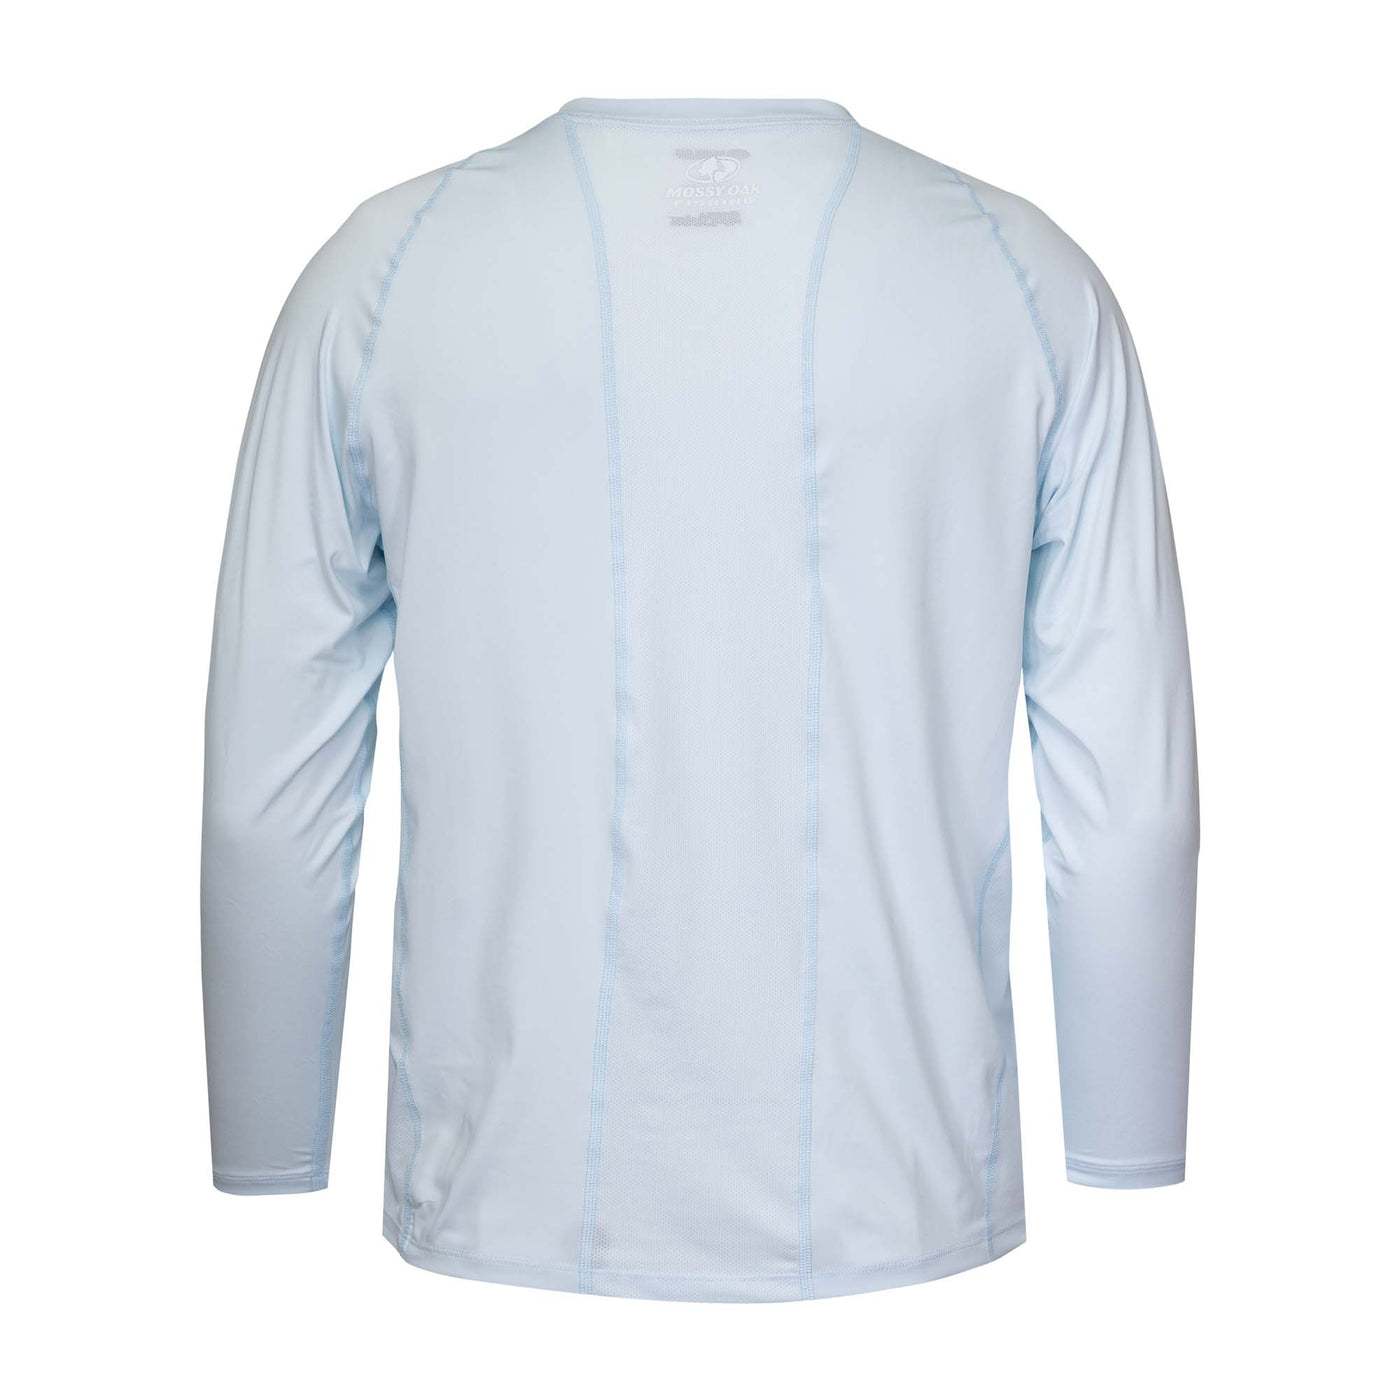 Tidal Breeze Long Sleeve Shirt – The Mossy Oak Store